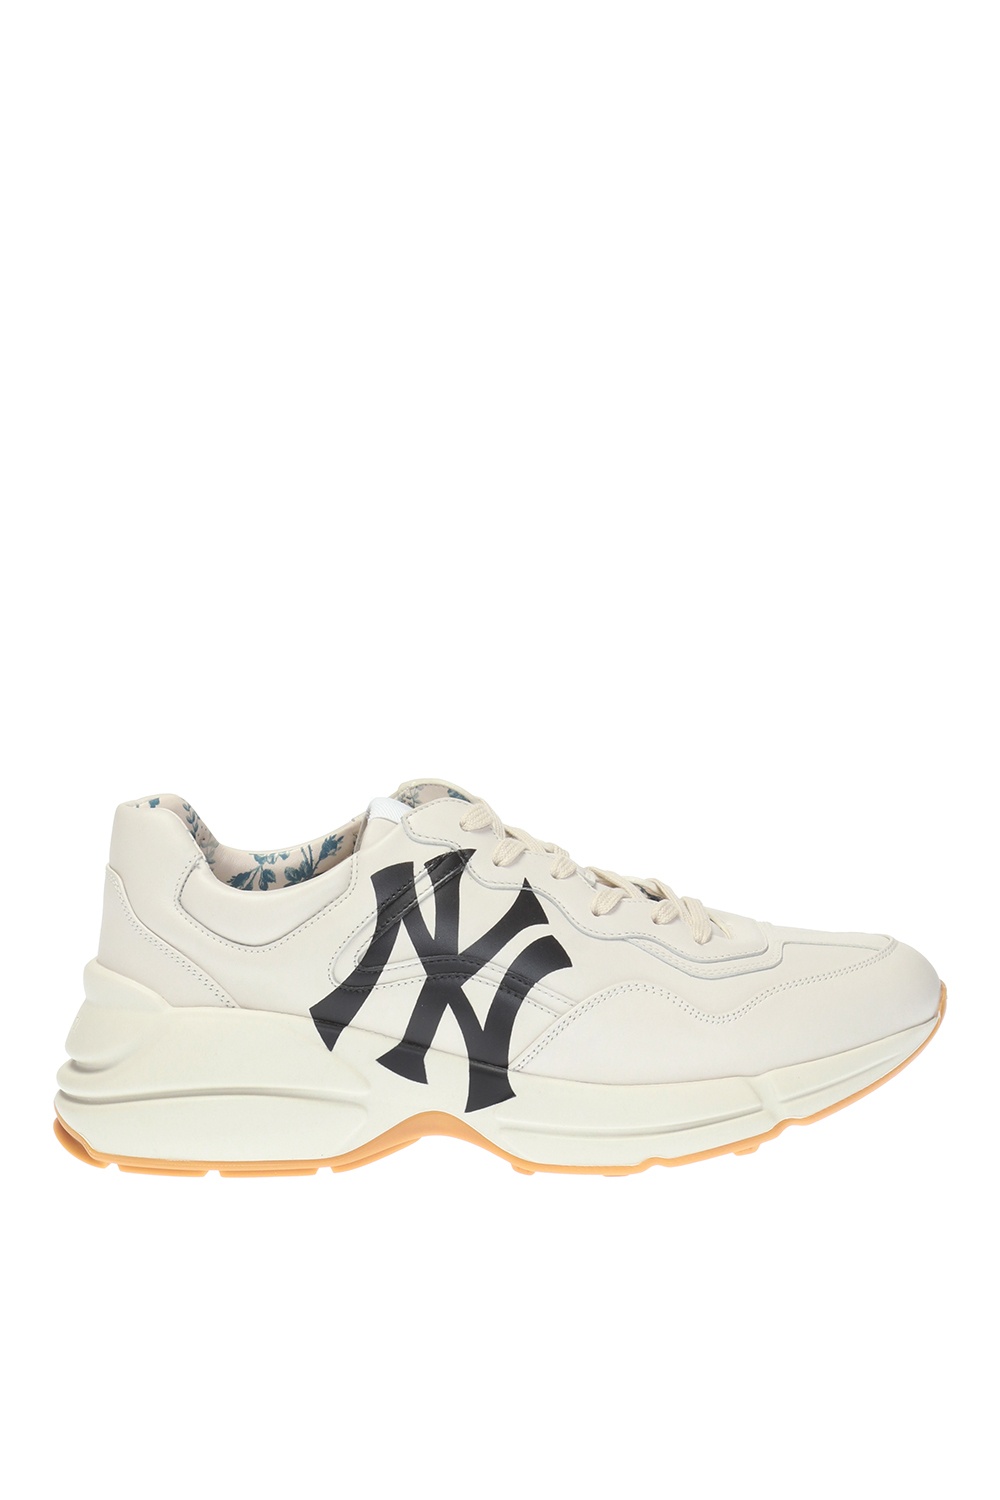 Gucci Rhyton Leather Sneaker 'NY Yankees' 548638-DRW00-4520 - KICKS CREW